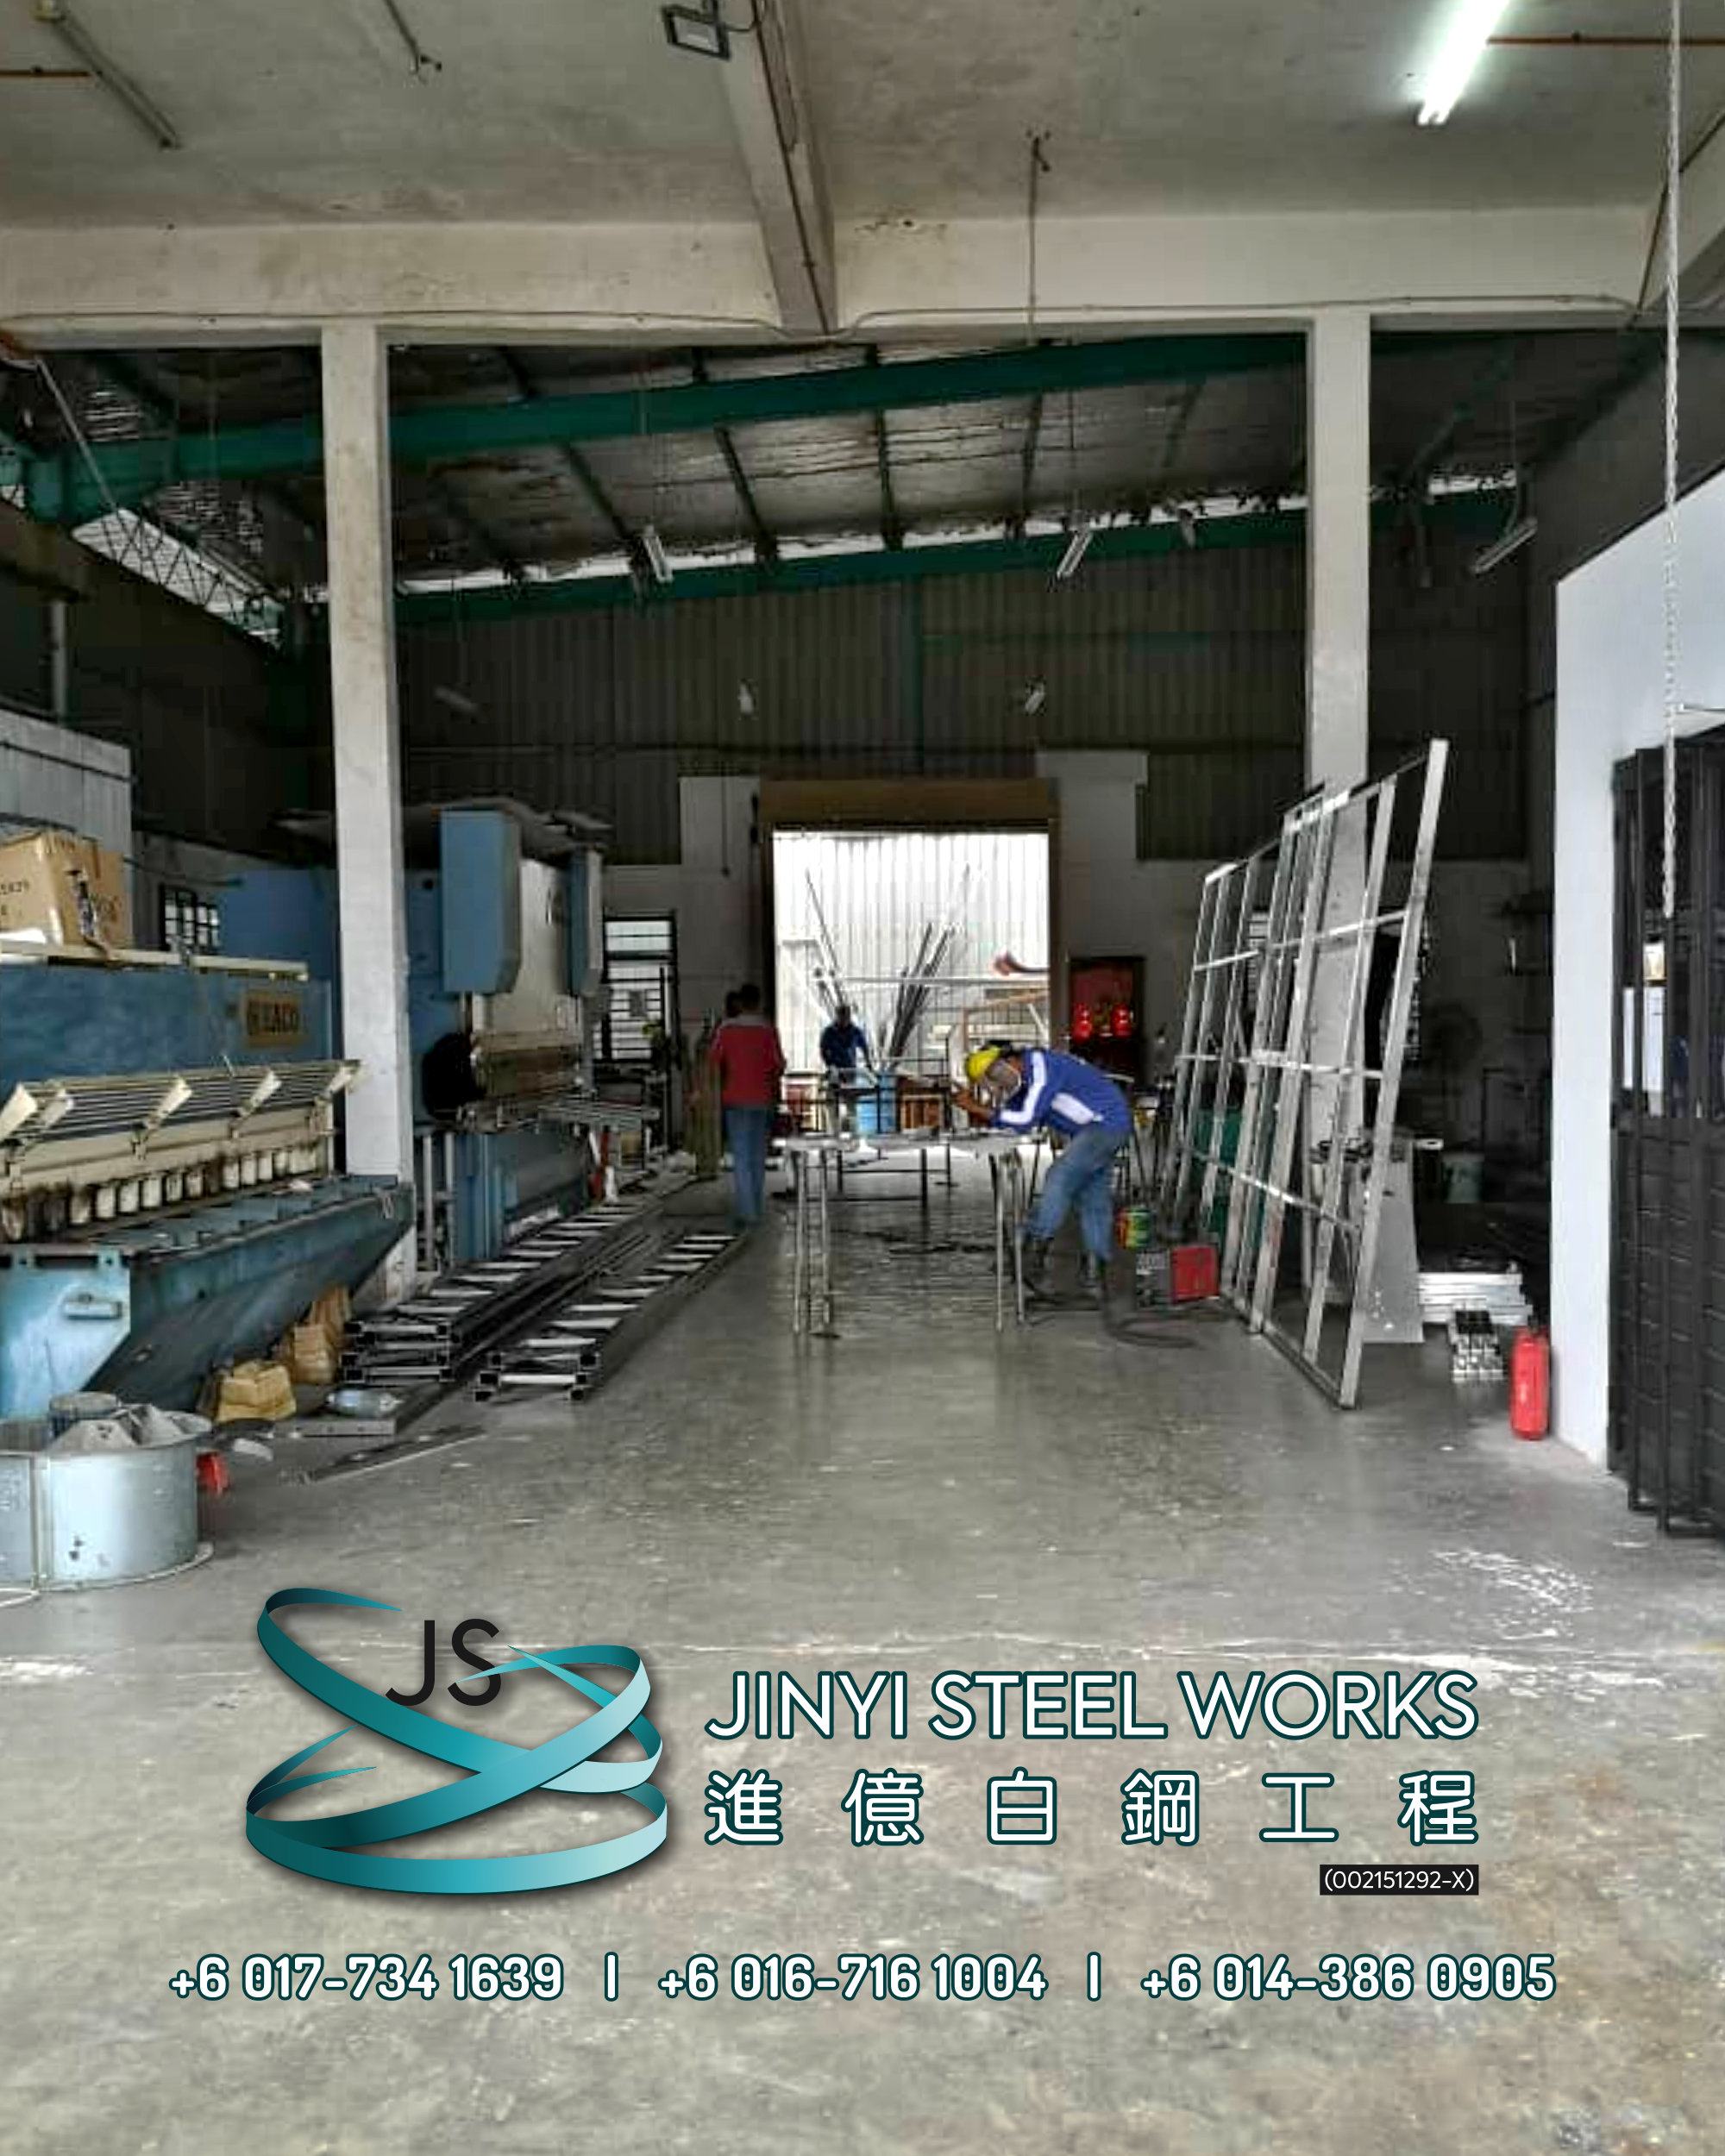 Jinyi Steel Works 铁与不锈钢产品制造商 为您定制钢铁产品与安装 柔佛 马六甲 森美兰 吉隆坡 雪兰莪 彭亨 峇株巴辖 不锈钢制造商 B02